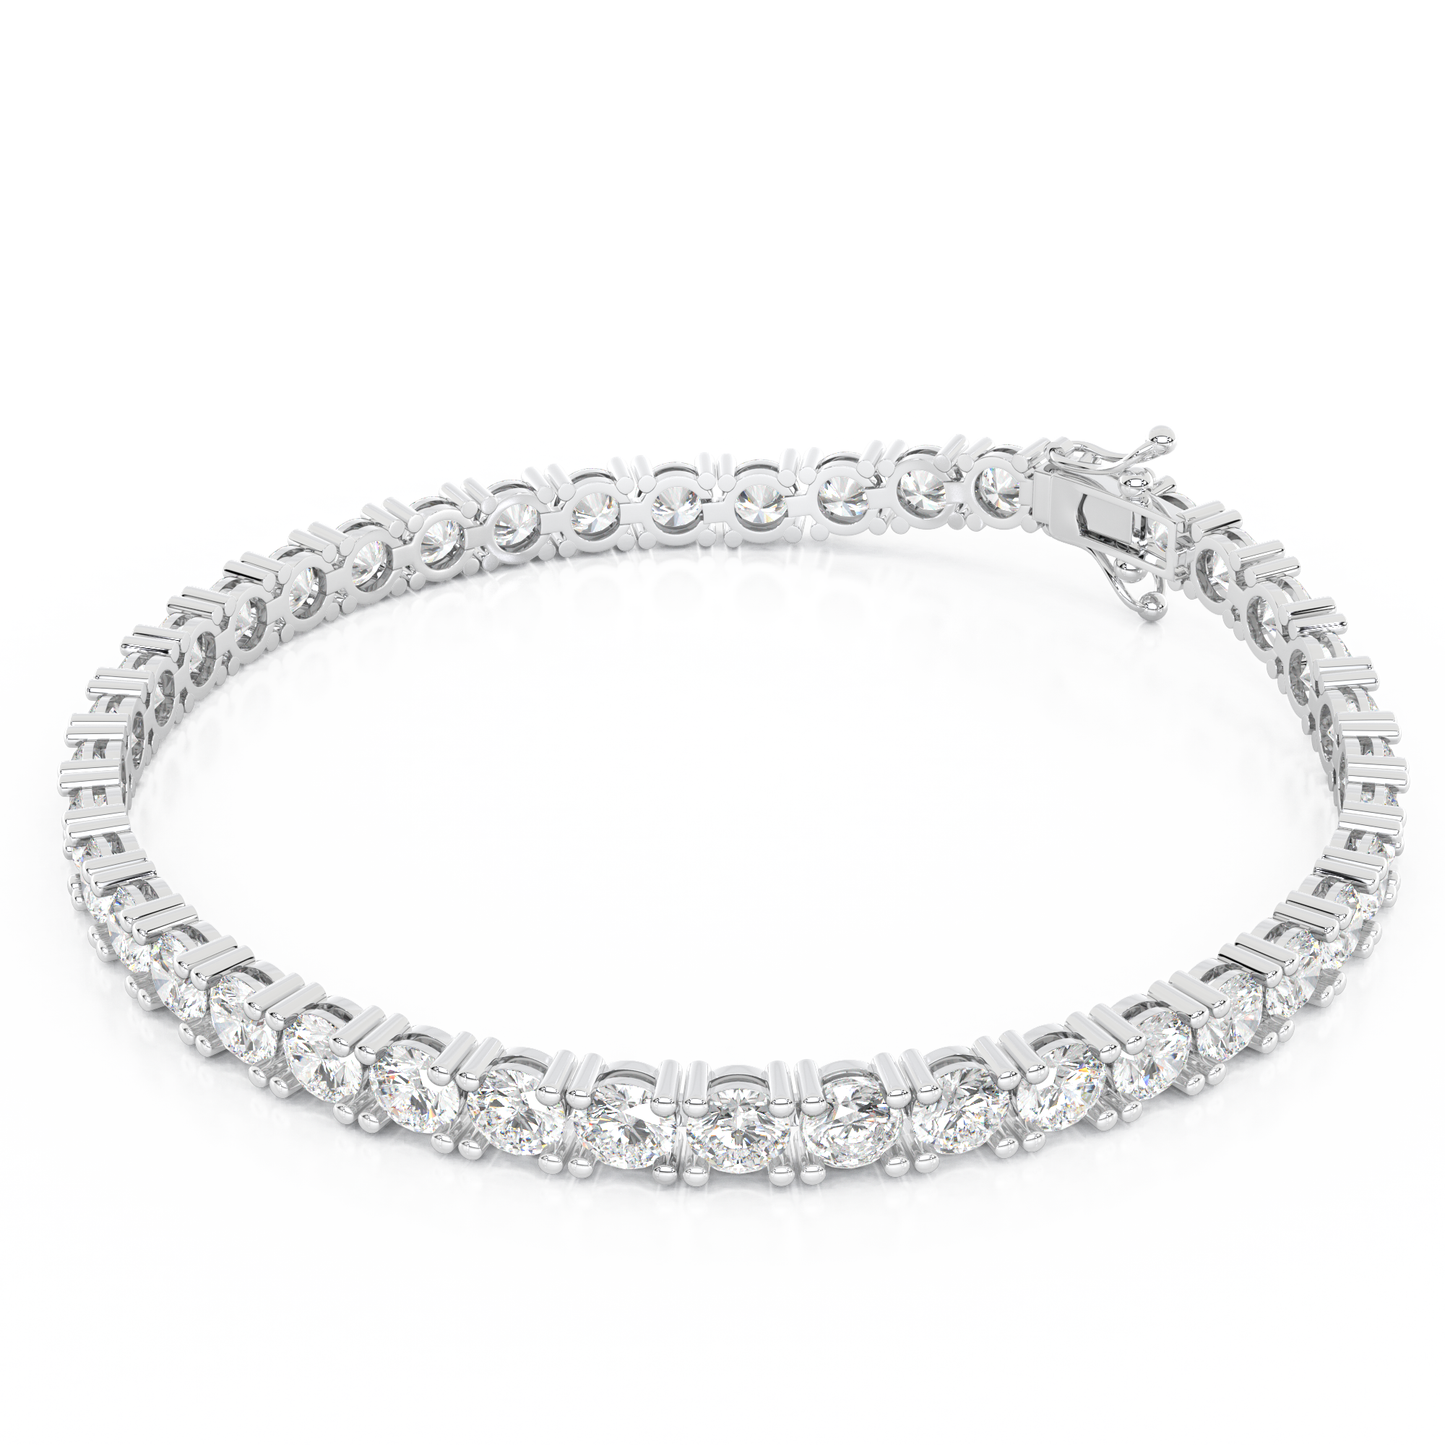 5.00cts+ 4-Prong Lab Grown Diamond Bracelet <Affordable>